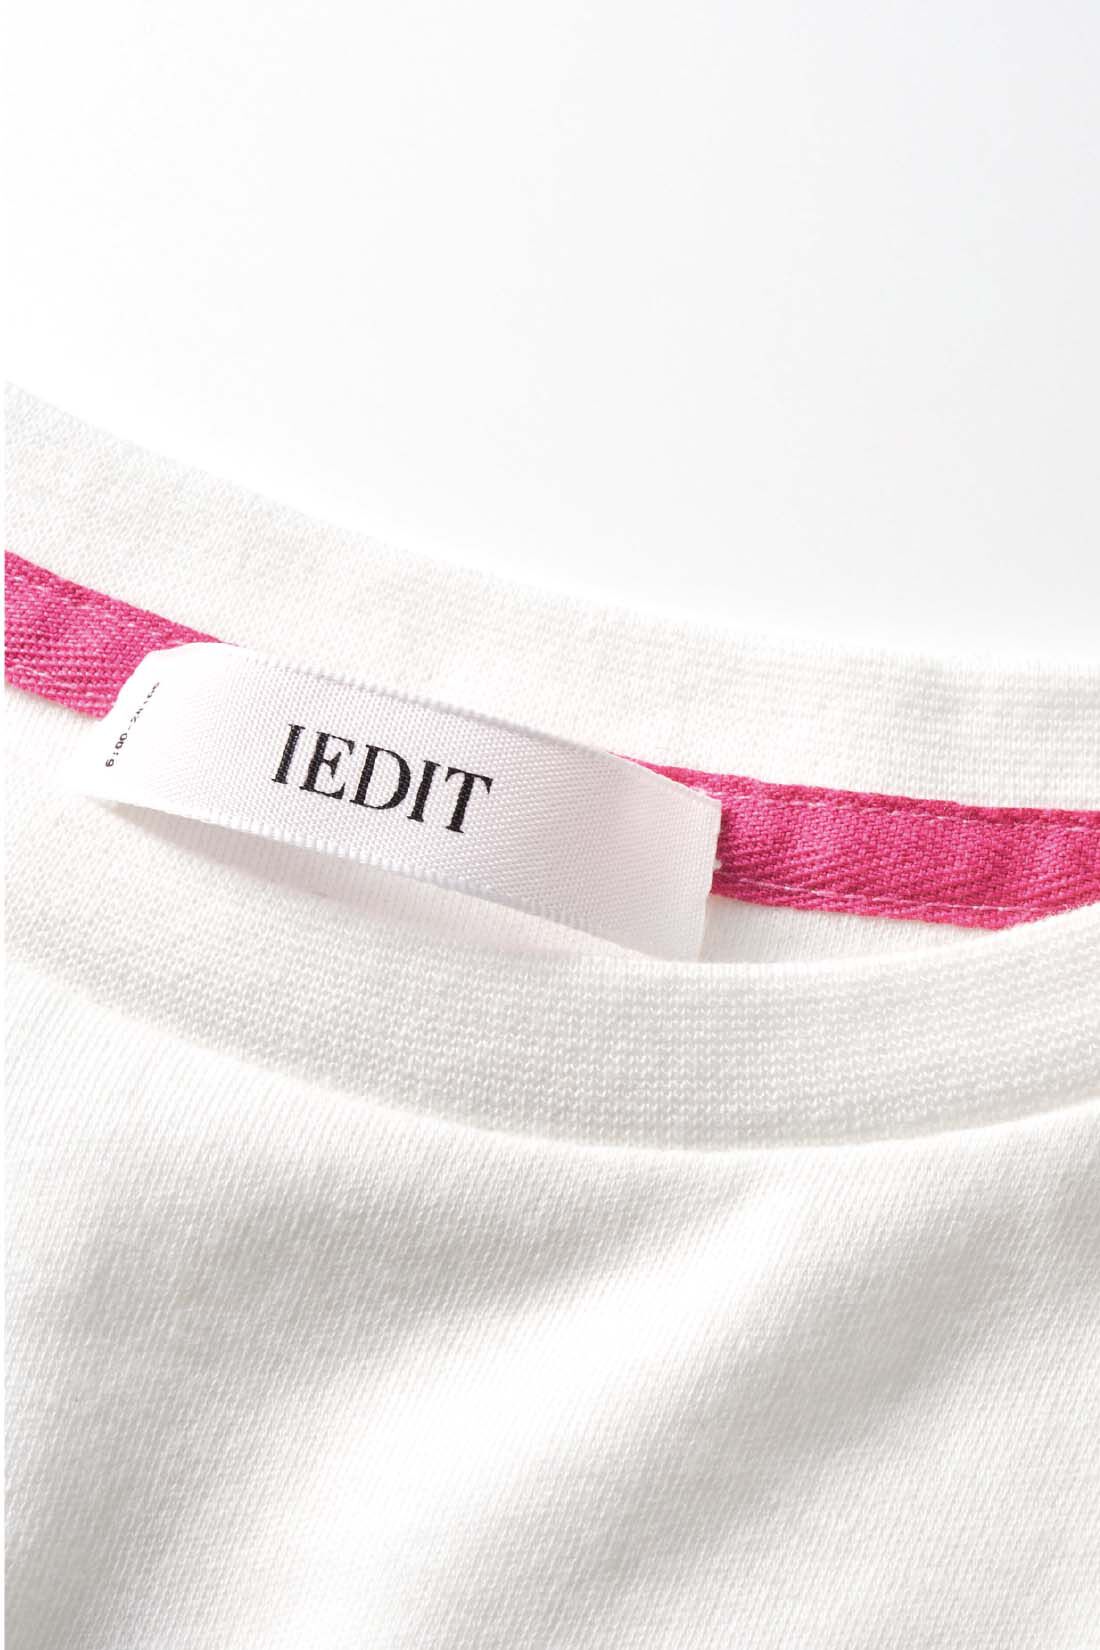 IEDIT|Live love cottonプロジェクト　IEDIT[イディット]　近代美術の創始者マネが描いたチャーミングなベルト・モリゾをあしらったパフスリーブアートTシャツ〈ホワイト〉|コラージュしたロゴに合わせてネック裏のテープもピンク色に。